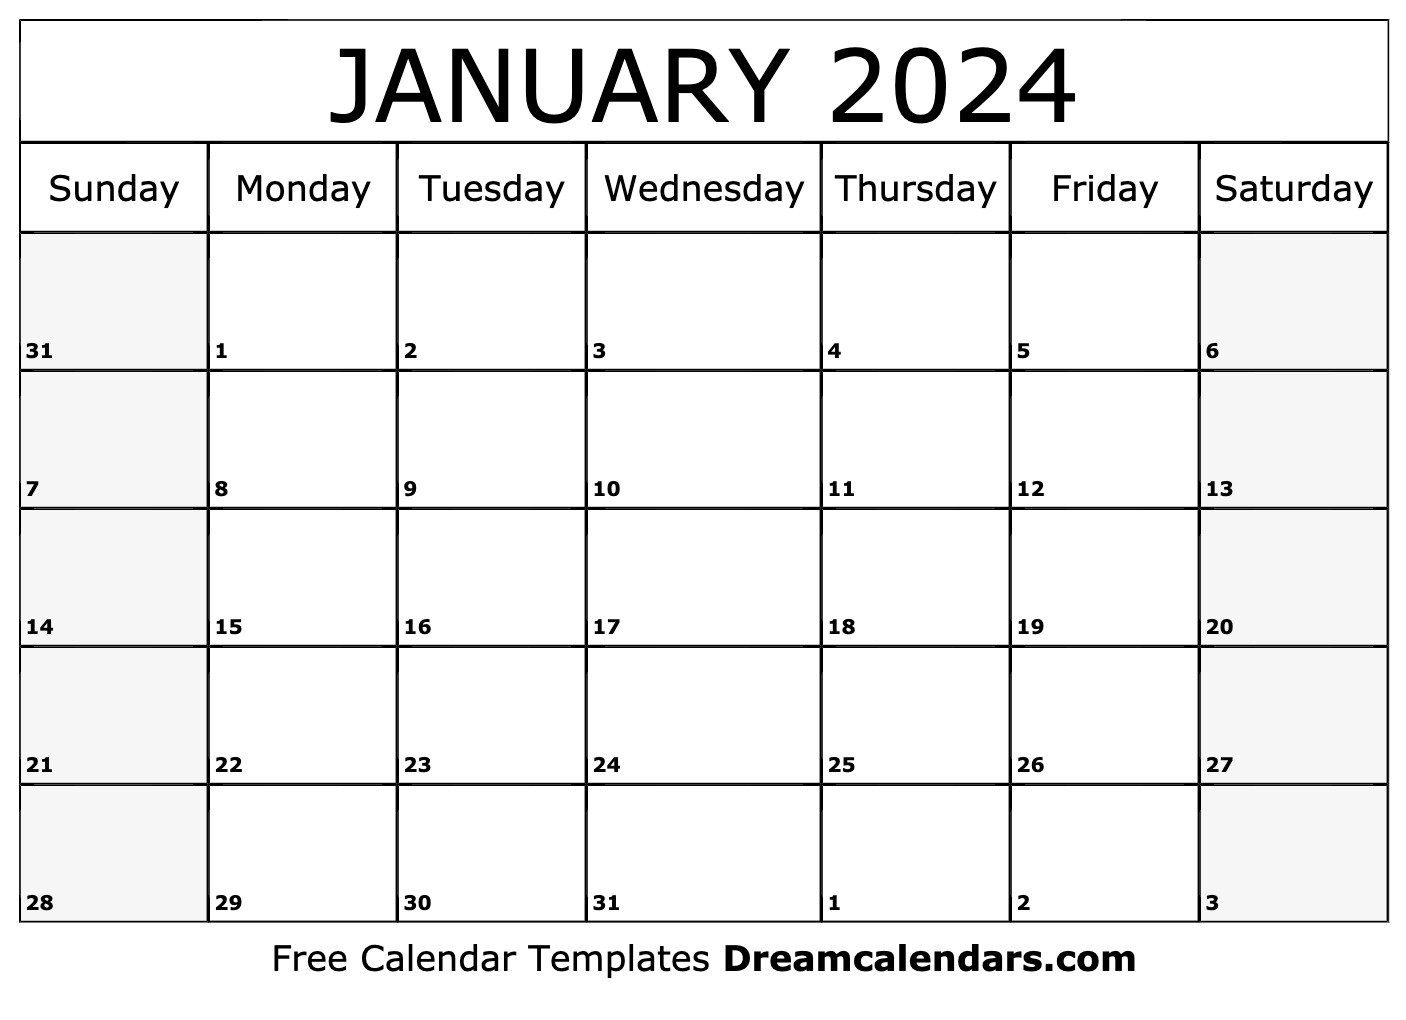 January 2024 Calendar | Free Blank Printable With Holidays for Free Printable January 2024 Calendar Wiki